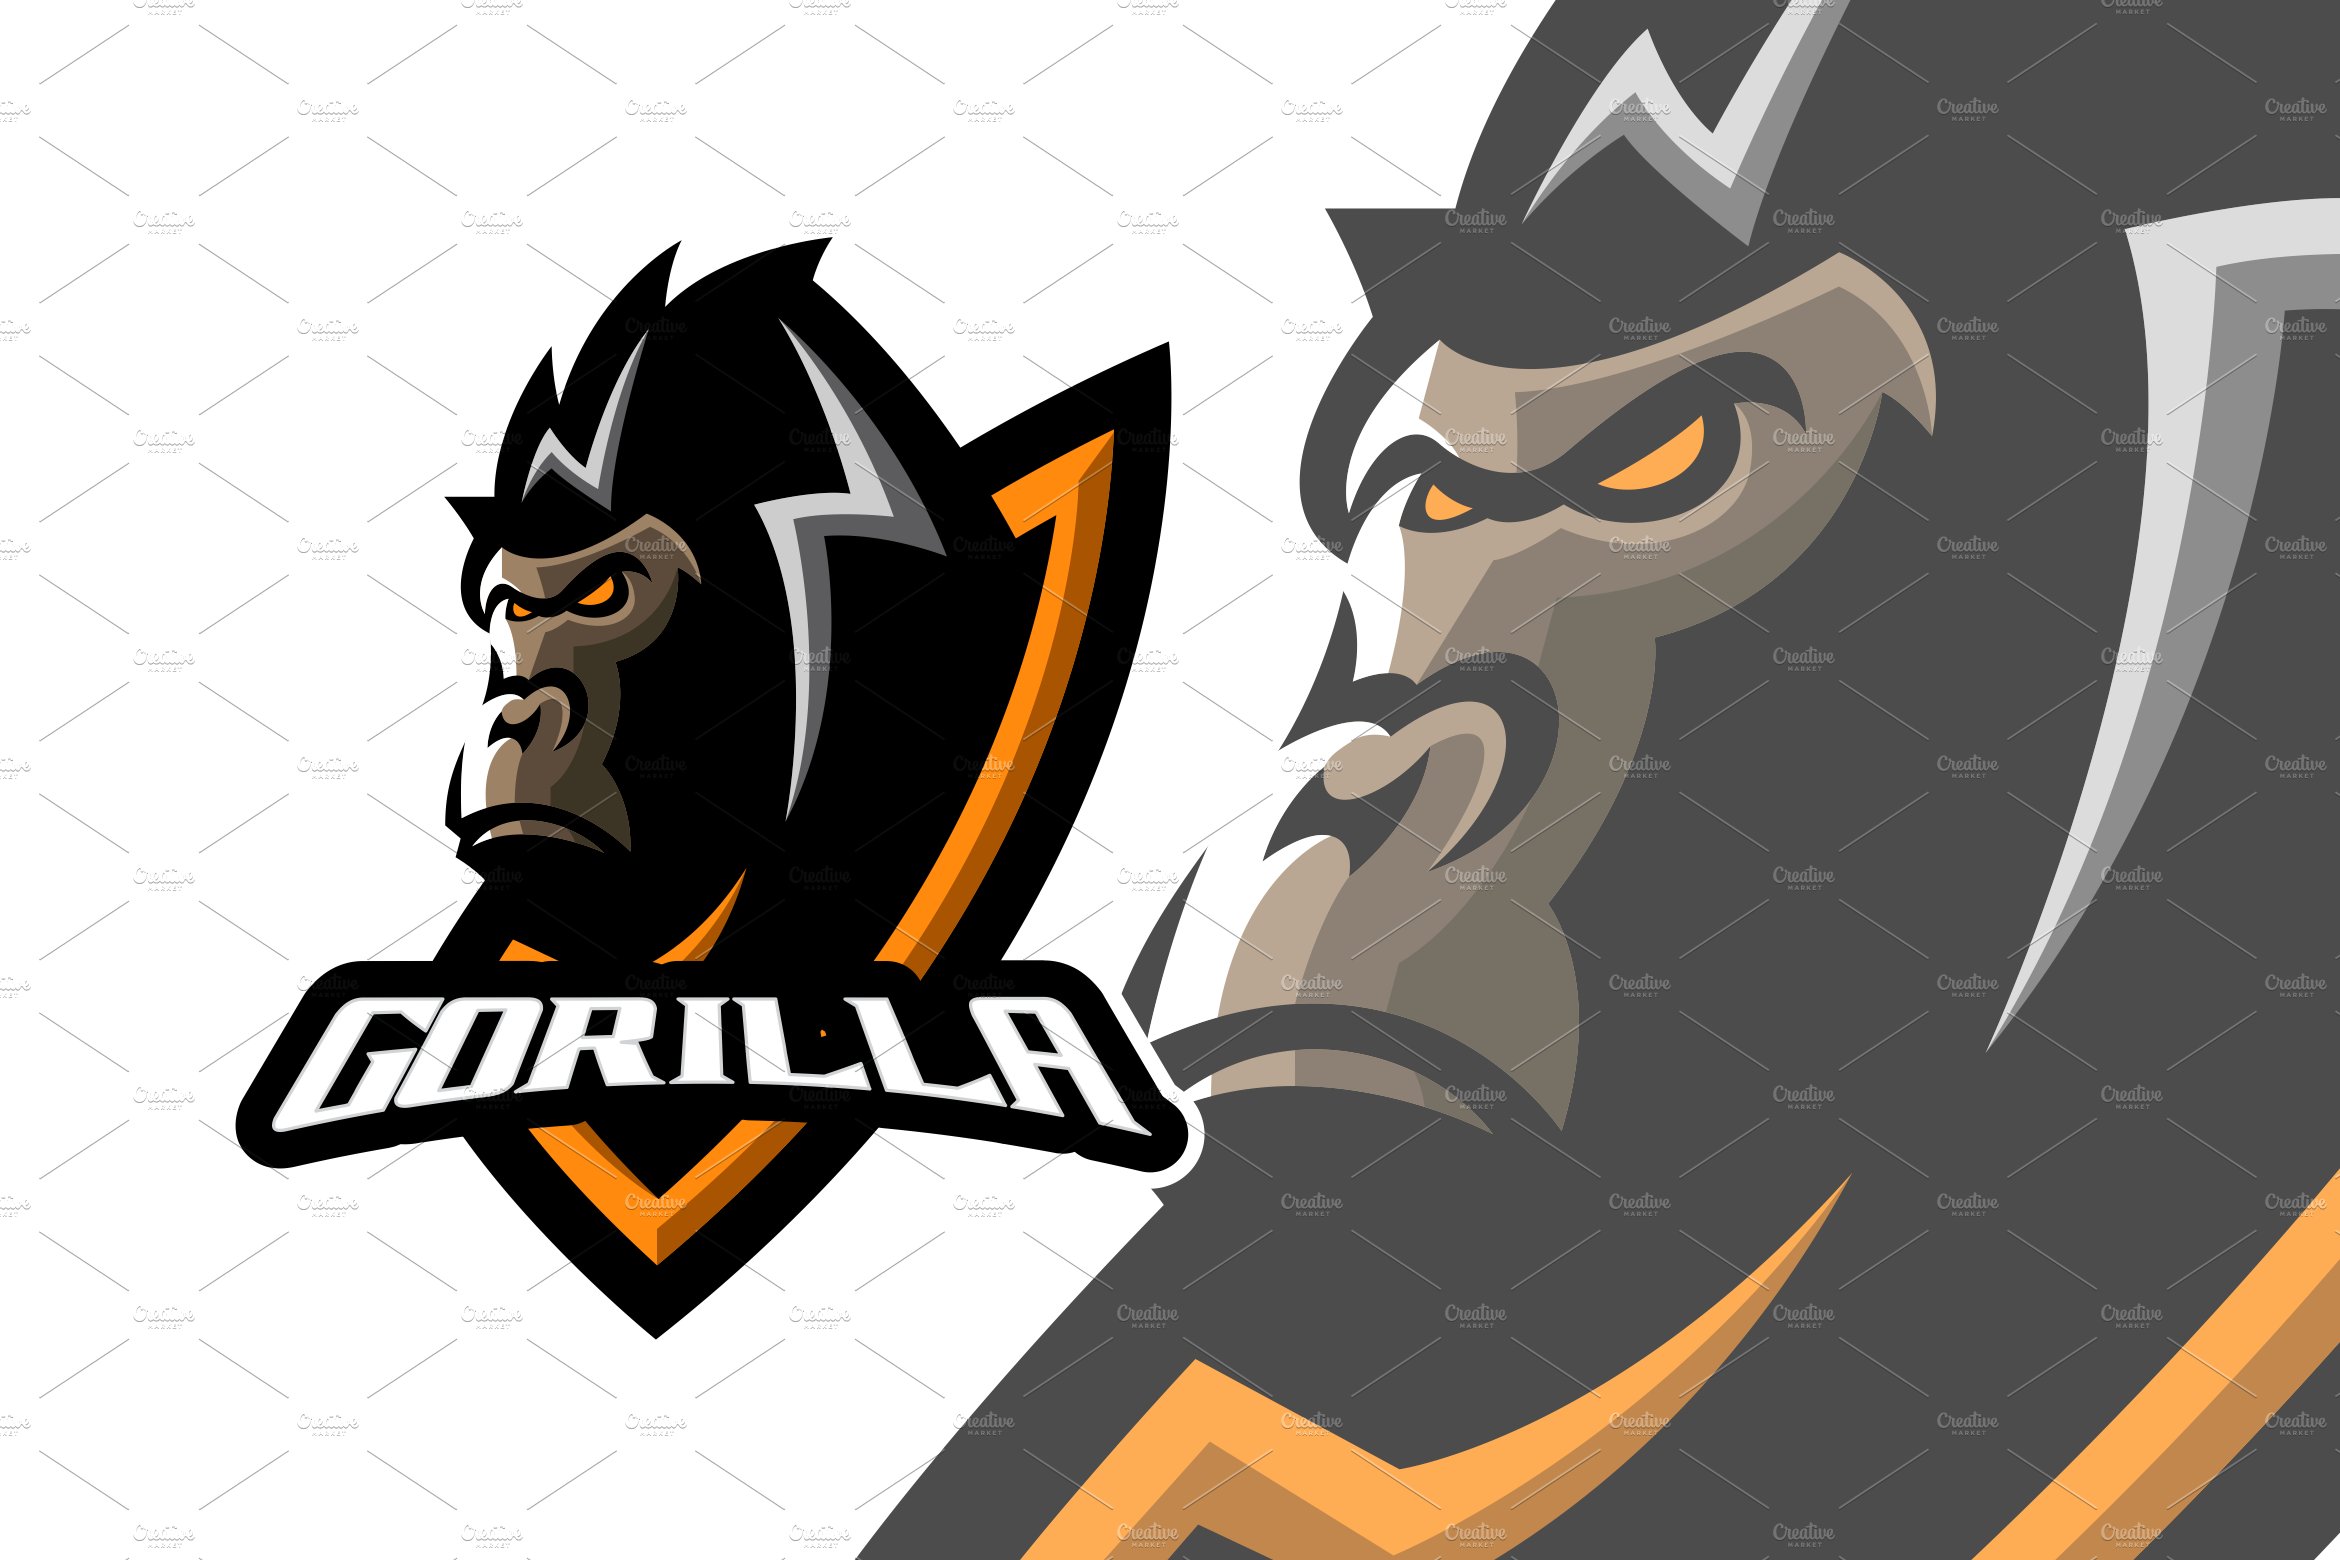 Gorilla Sport Logo Template cover image.